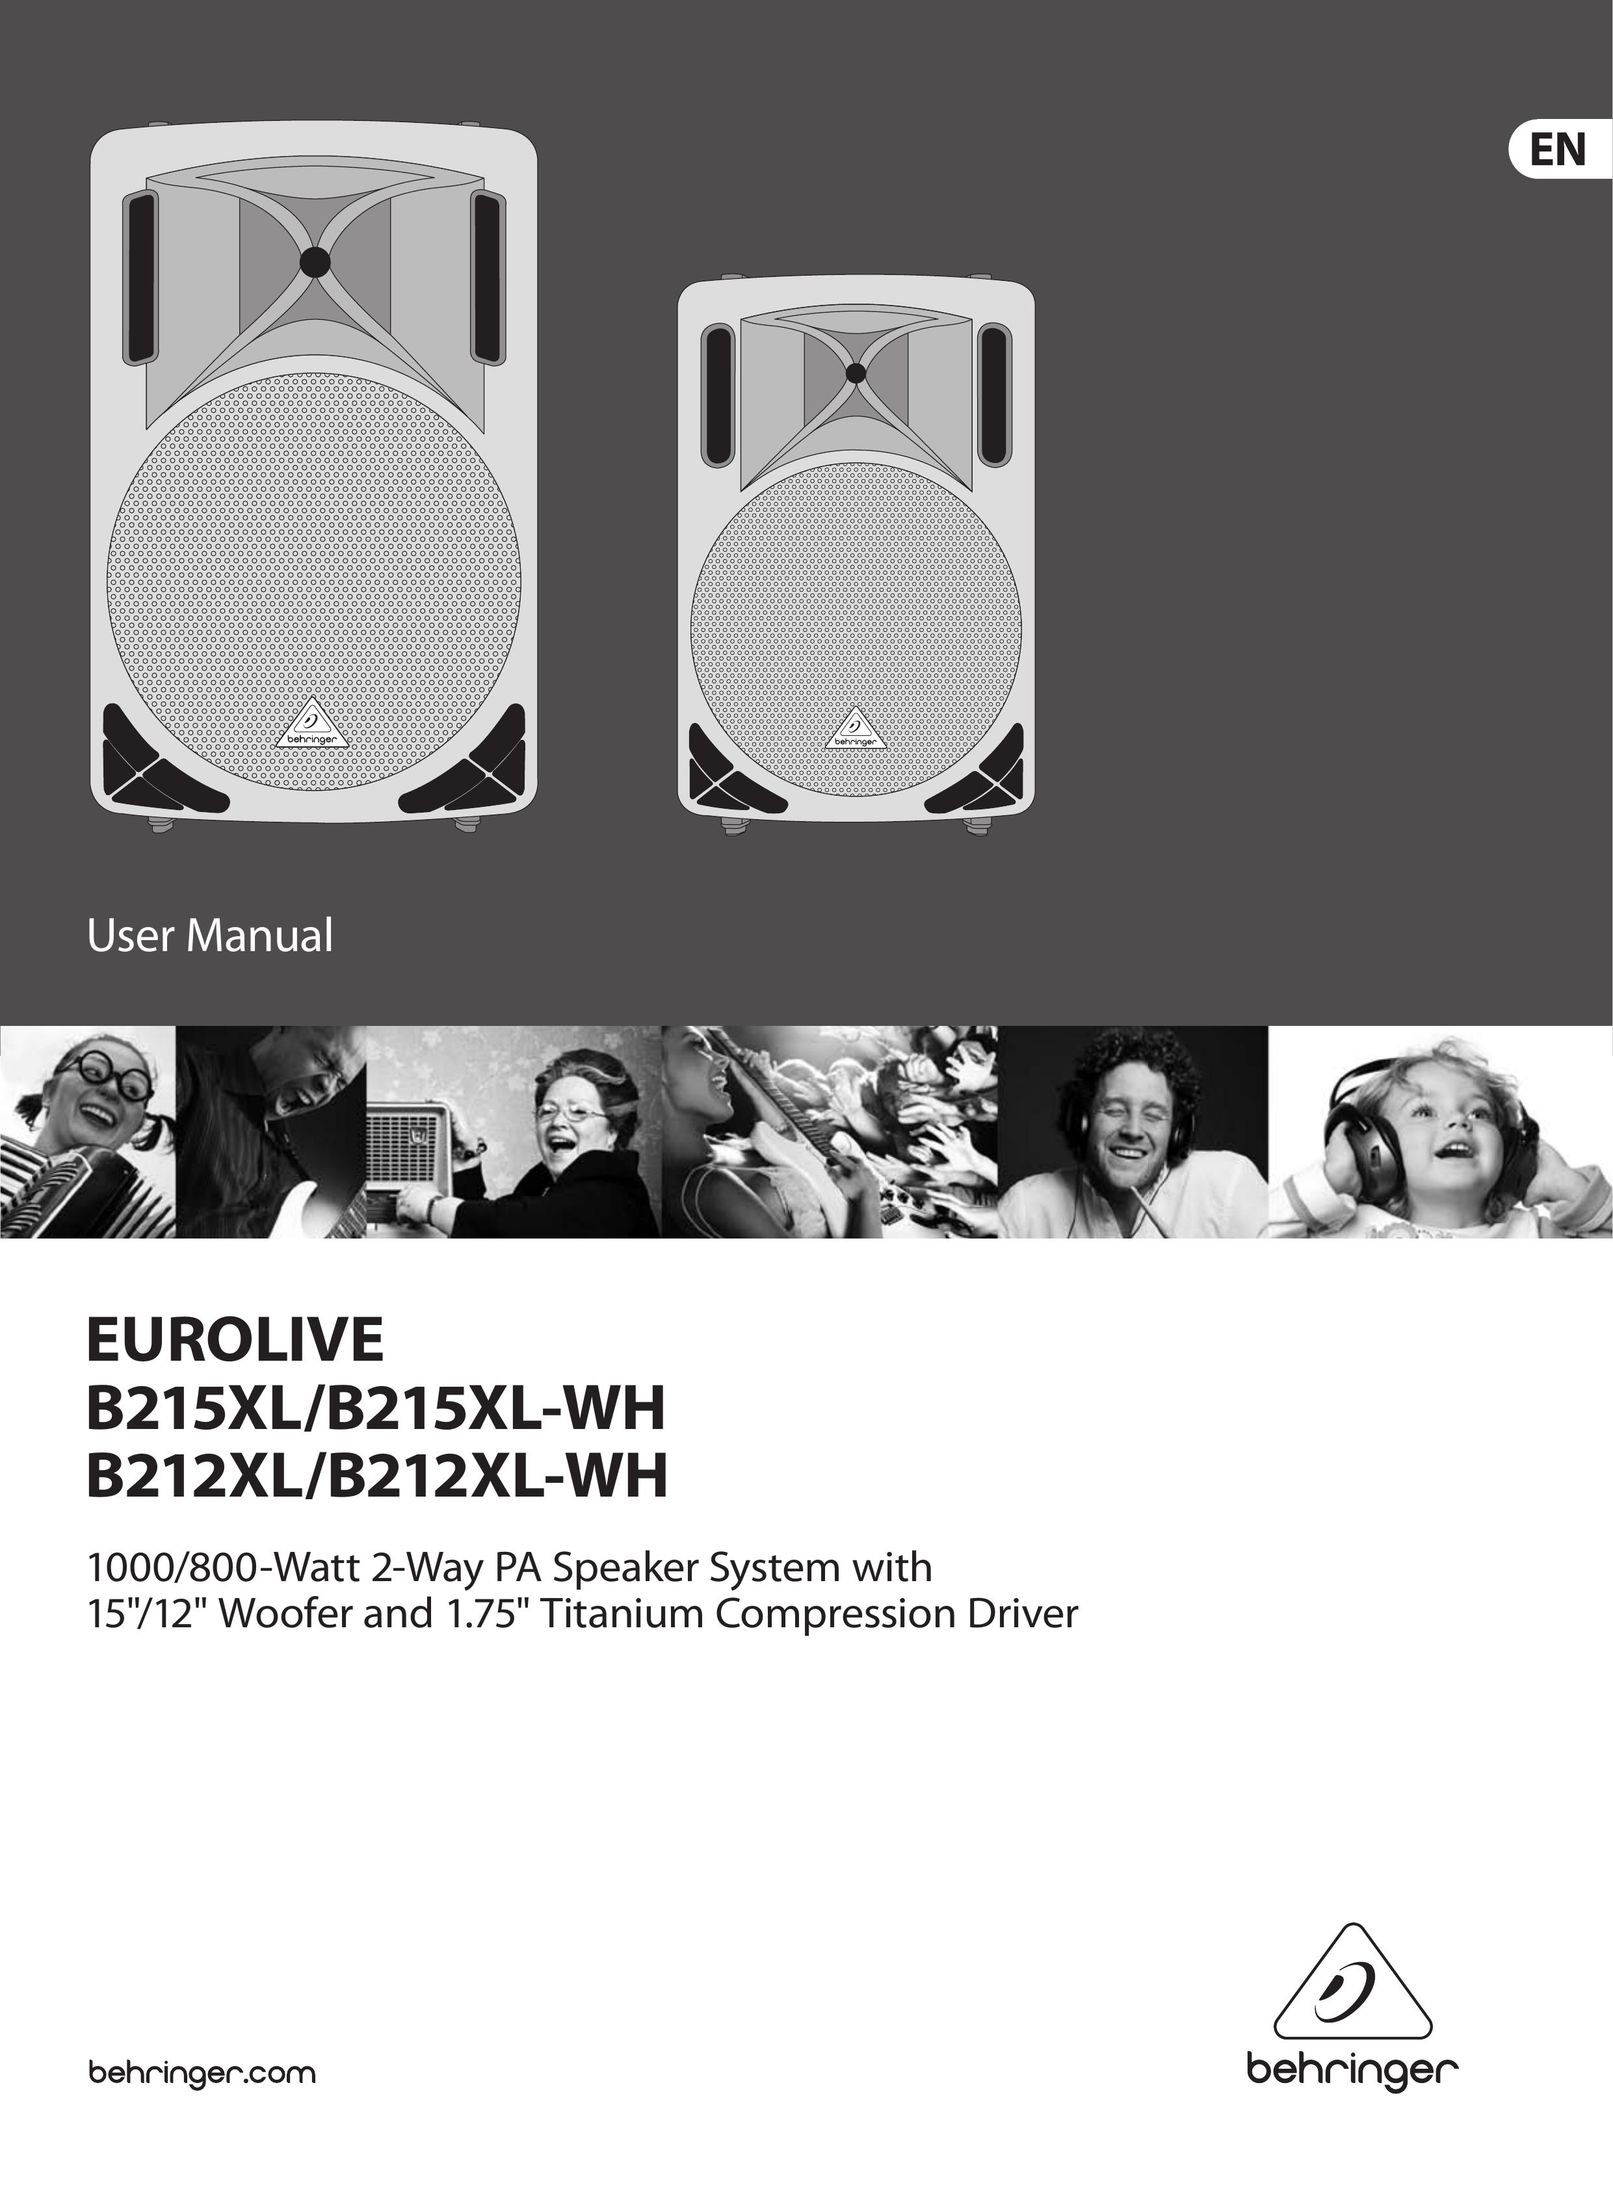 Behringer B215XL/B215XL-WH Car Speaker User Manual